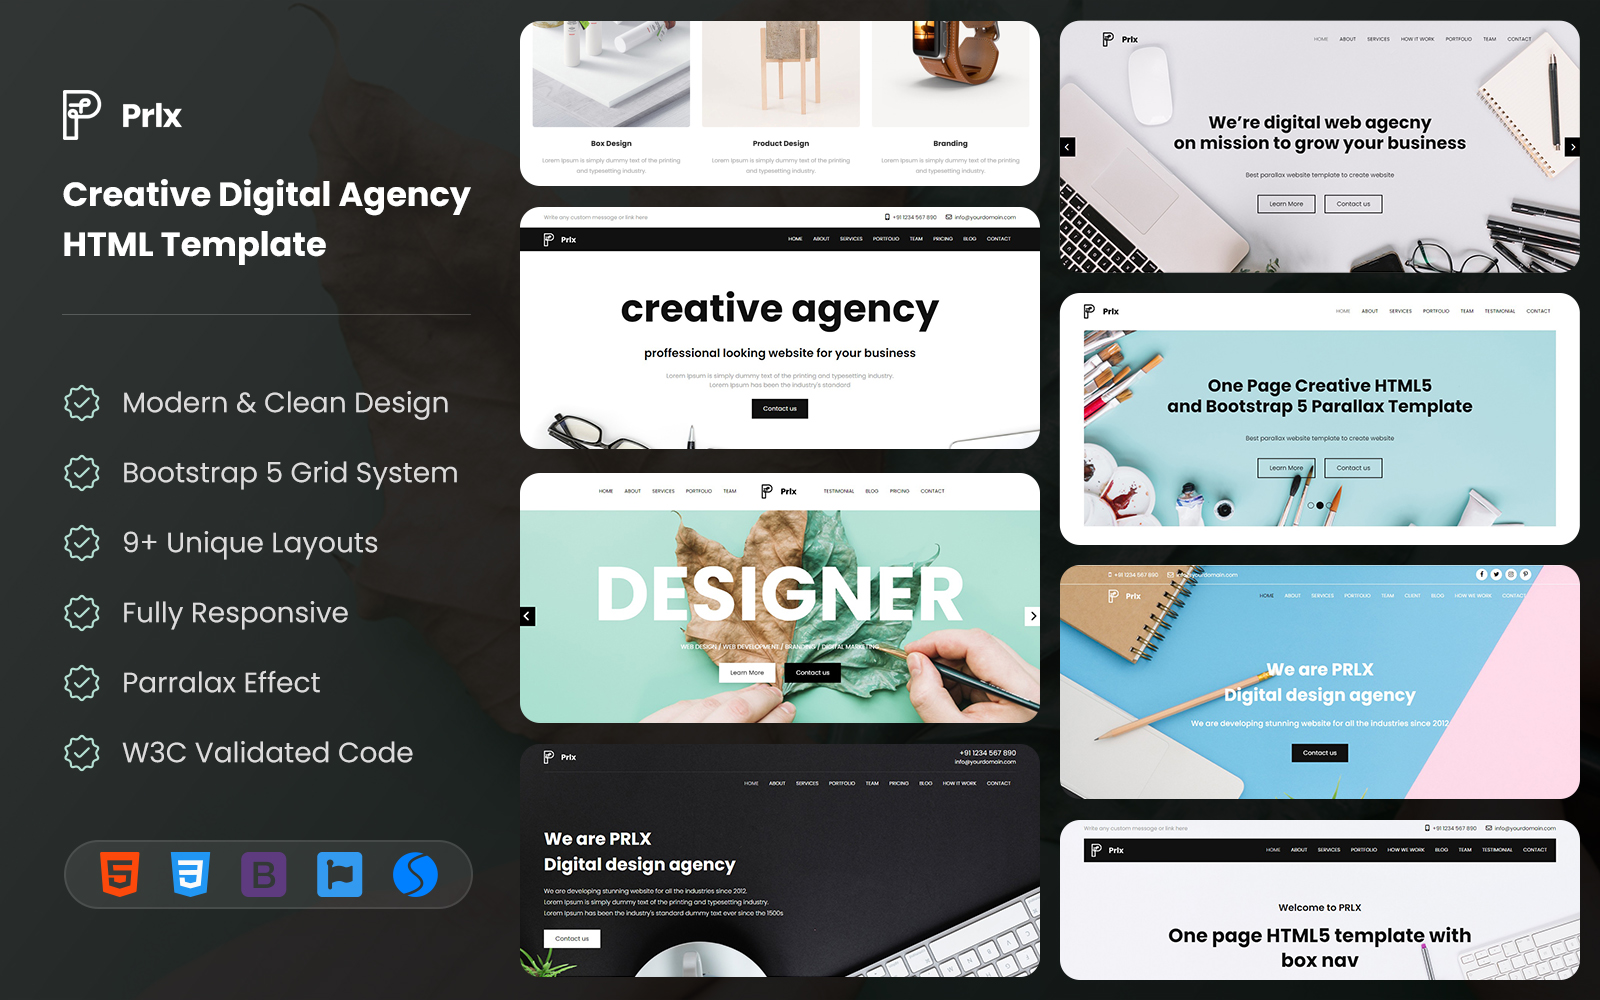 Prlx - Creative Digital Agency HTML Template